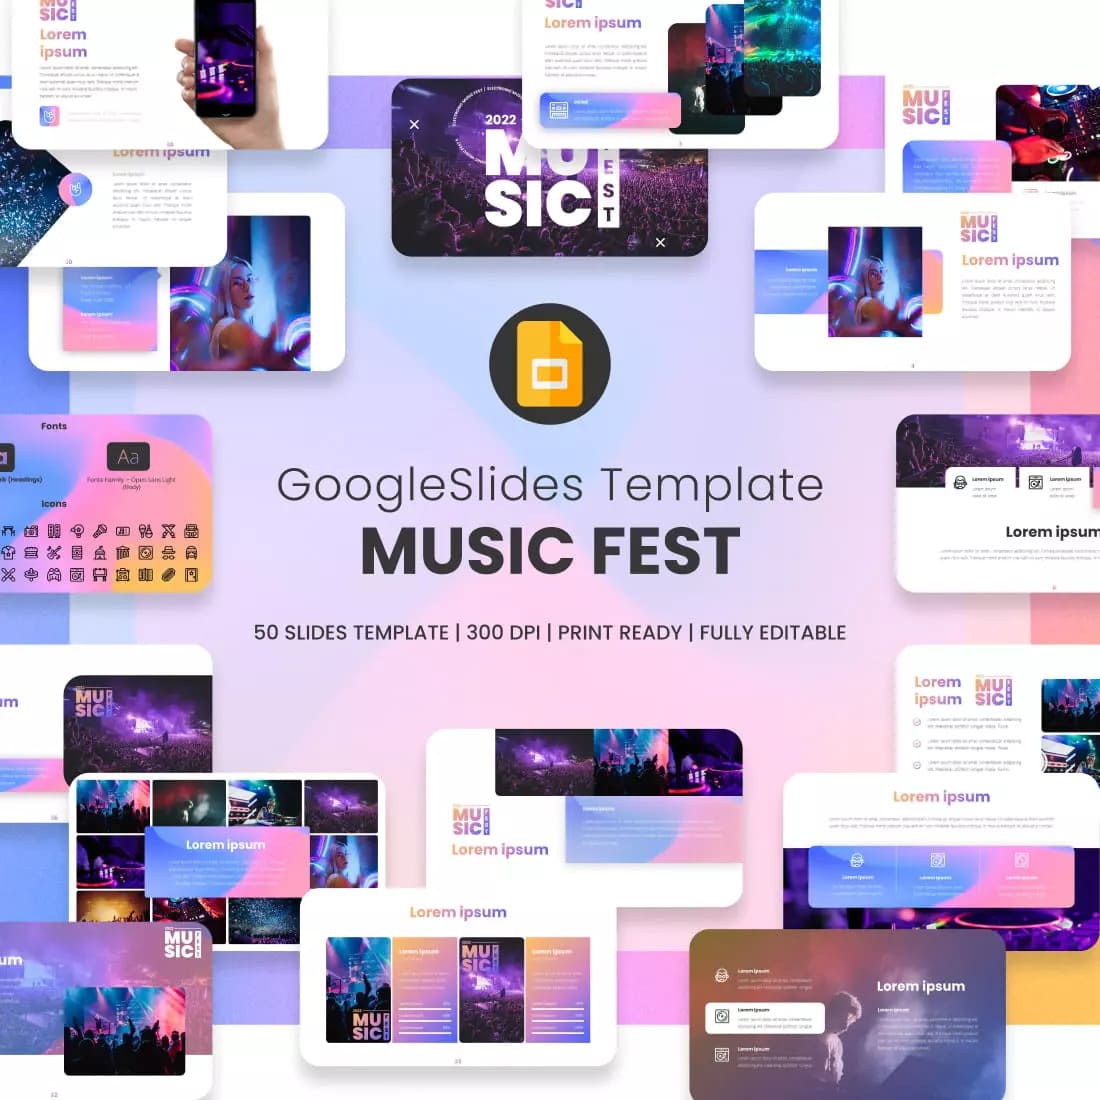 Music Fest Google Slides Template Preview 3.